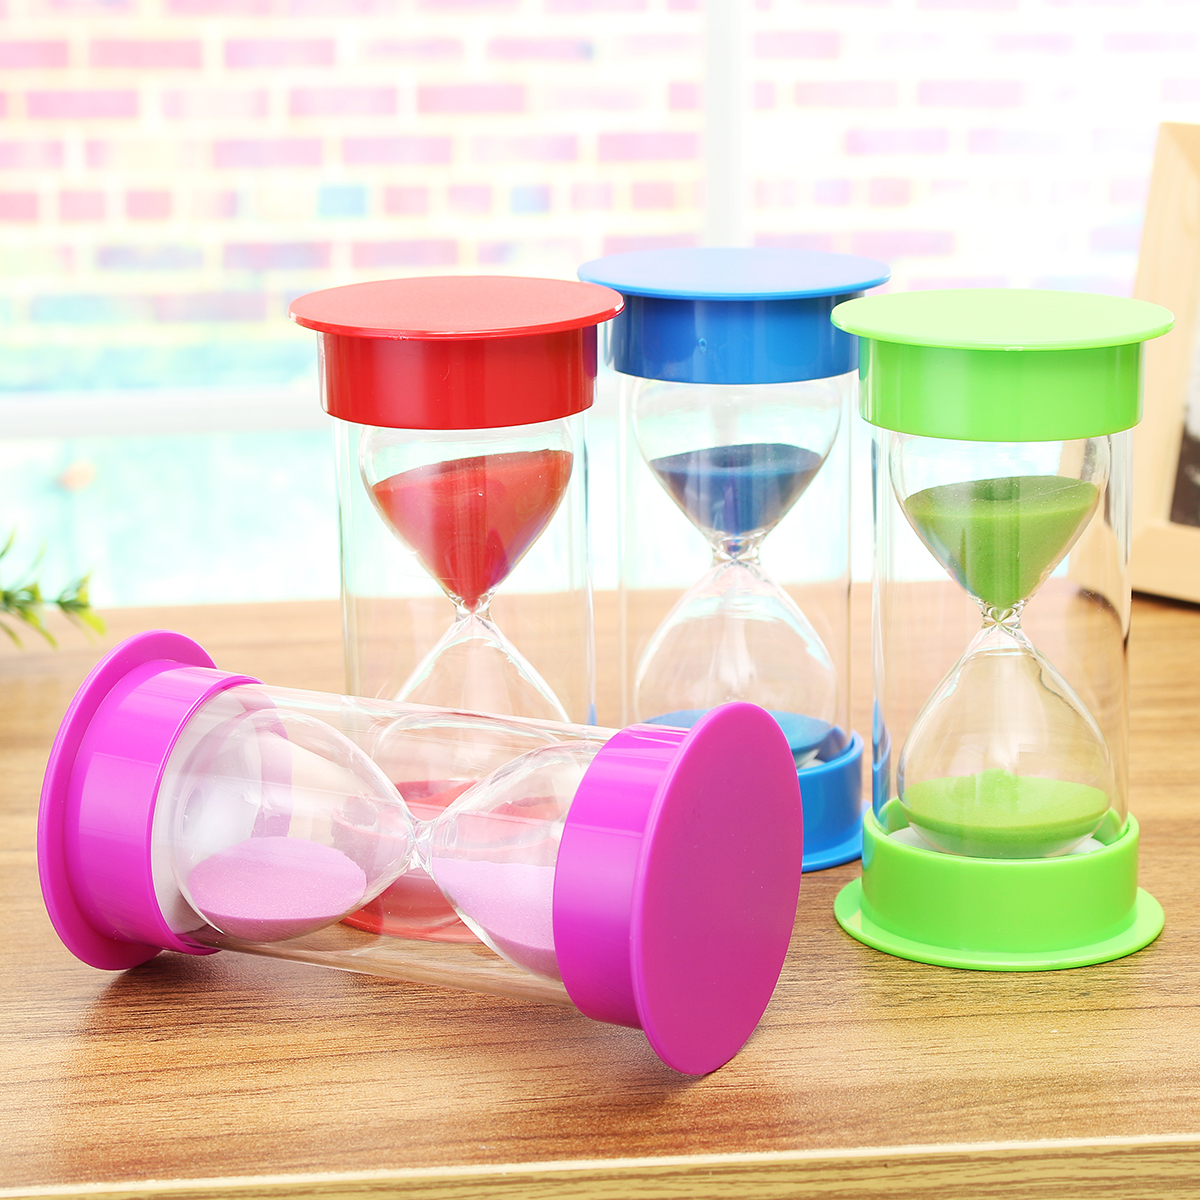 20-Minutes-12cm-Sandglass-Timer-Hourglass-Glass-Sand-Clock-Egg-Kid-Decor-Gift-1546465-3